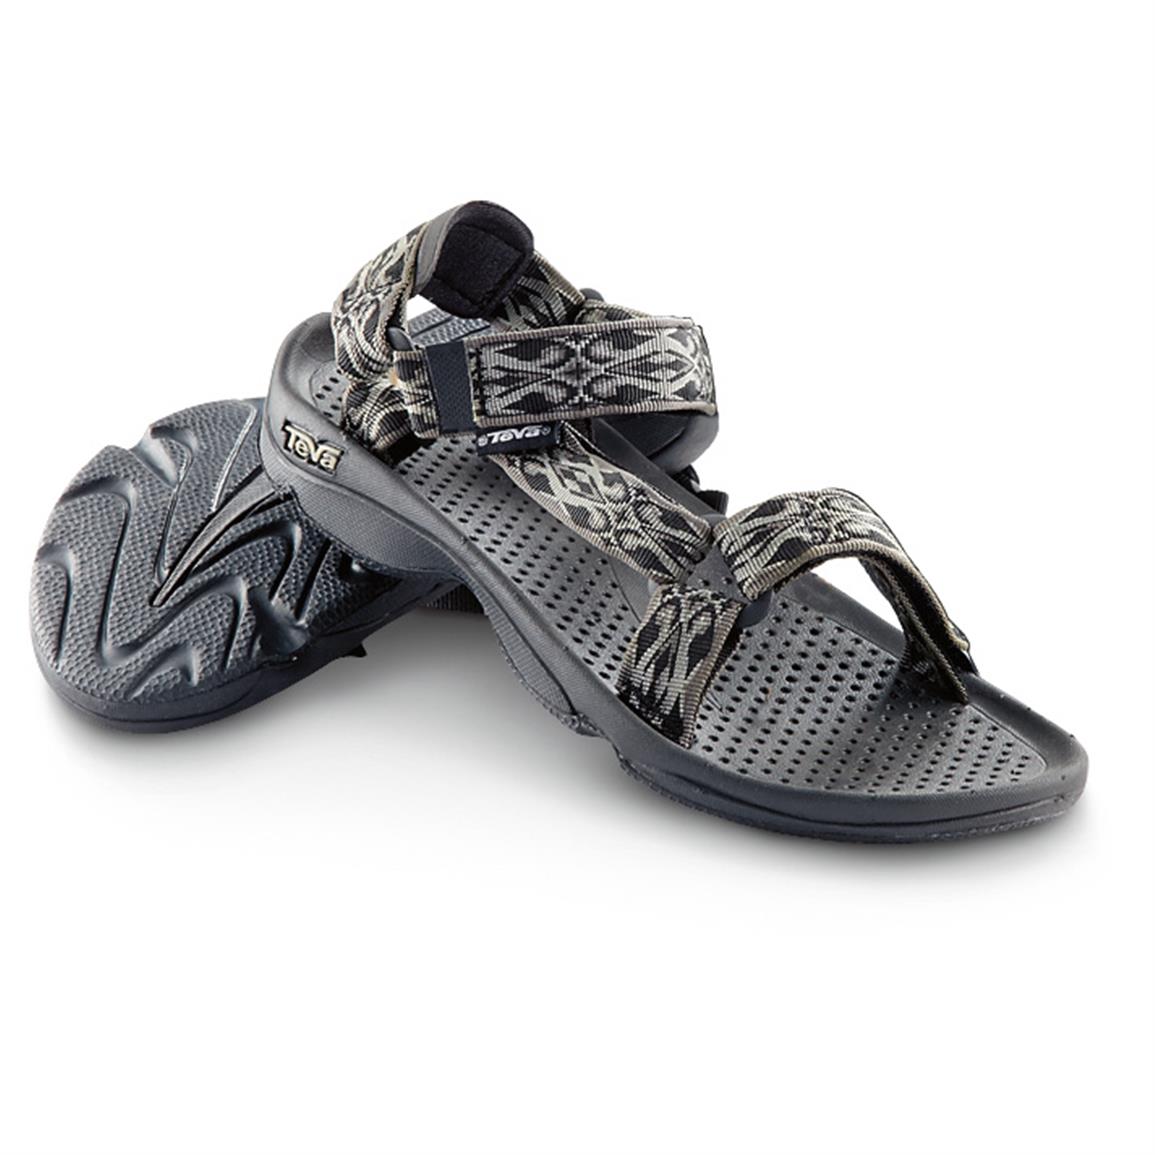 Men's TevaÂ® Hurricane 3 Sandals, Gray - 580328, Sandals  Flip Flops ...